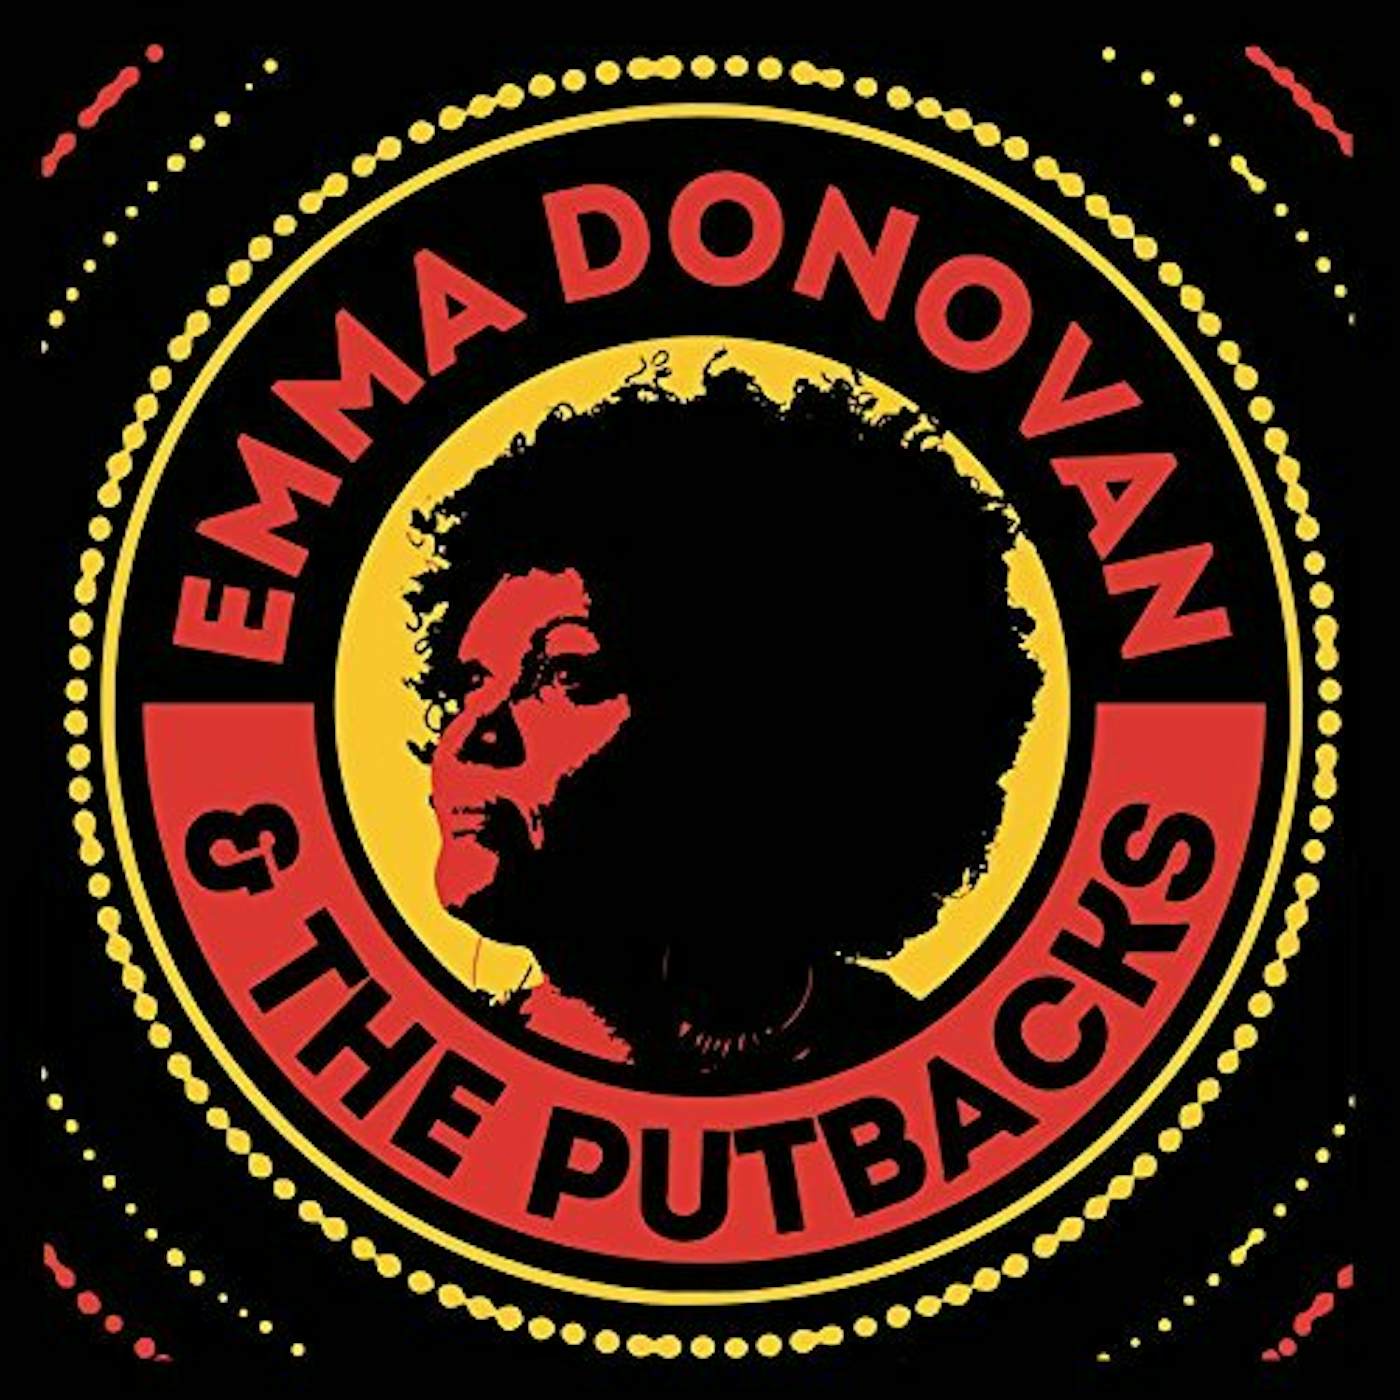 Emma Donovan & The Putbacks BLACKFELLA WHITEFELLA Vinyl Record - UK Release